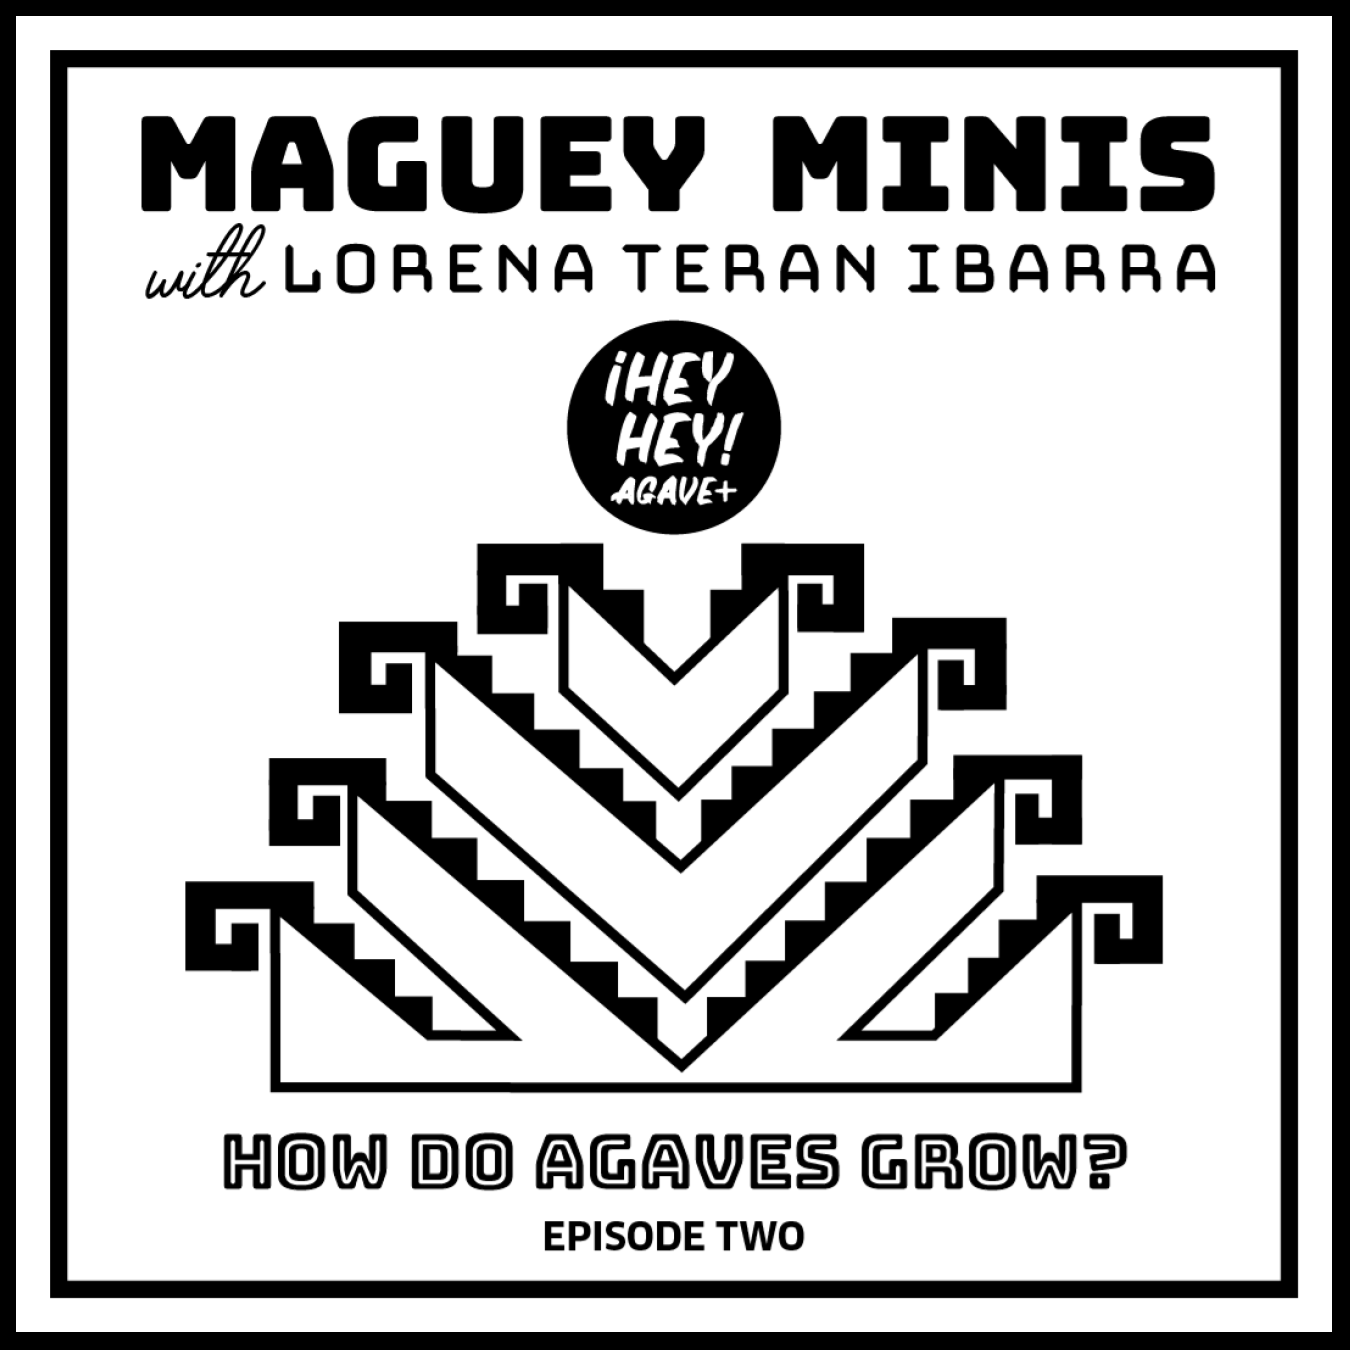 Maguey Minis + Episode Two